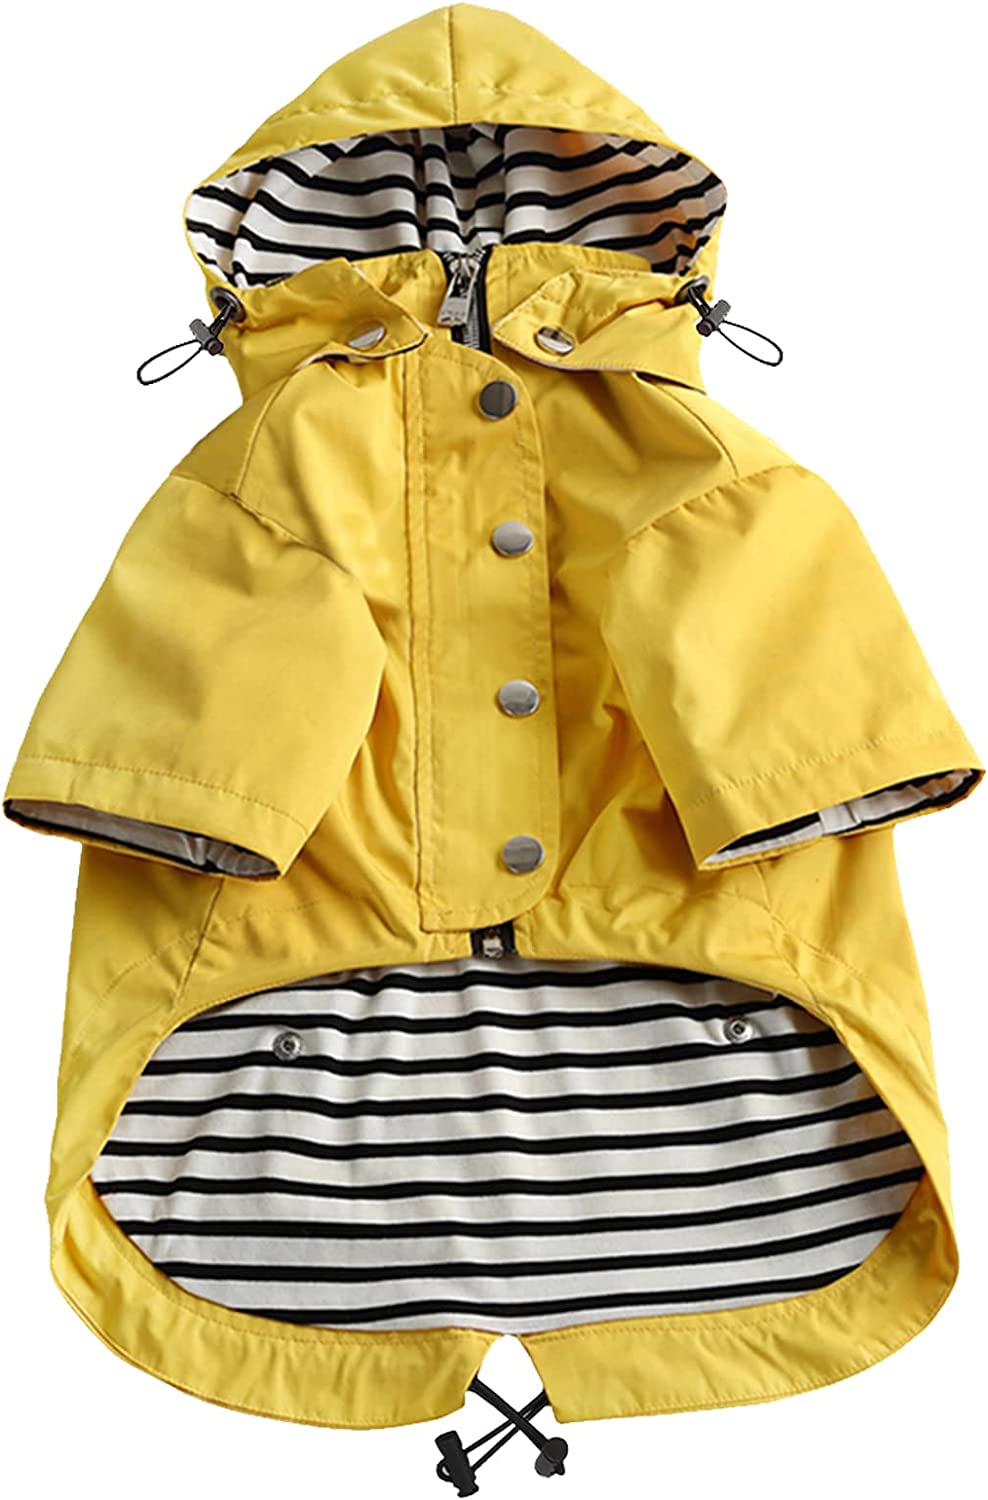 Morezi Dog Zip Up Dog Raincoat with Reflective Buttons, Rain/Water Resistant, Adjustable Drawstring, Removable Hood, Stylish Premium Dog Raincoats – Size XS to XXL Available – Yellow – L